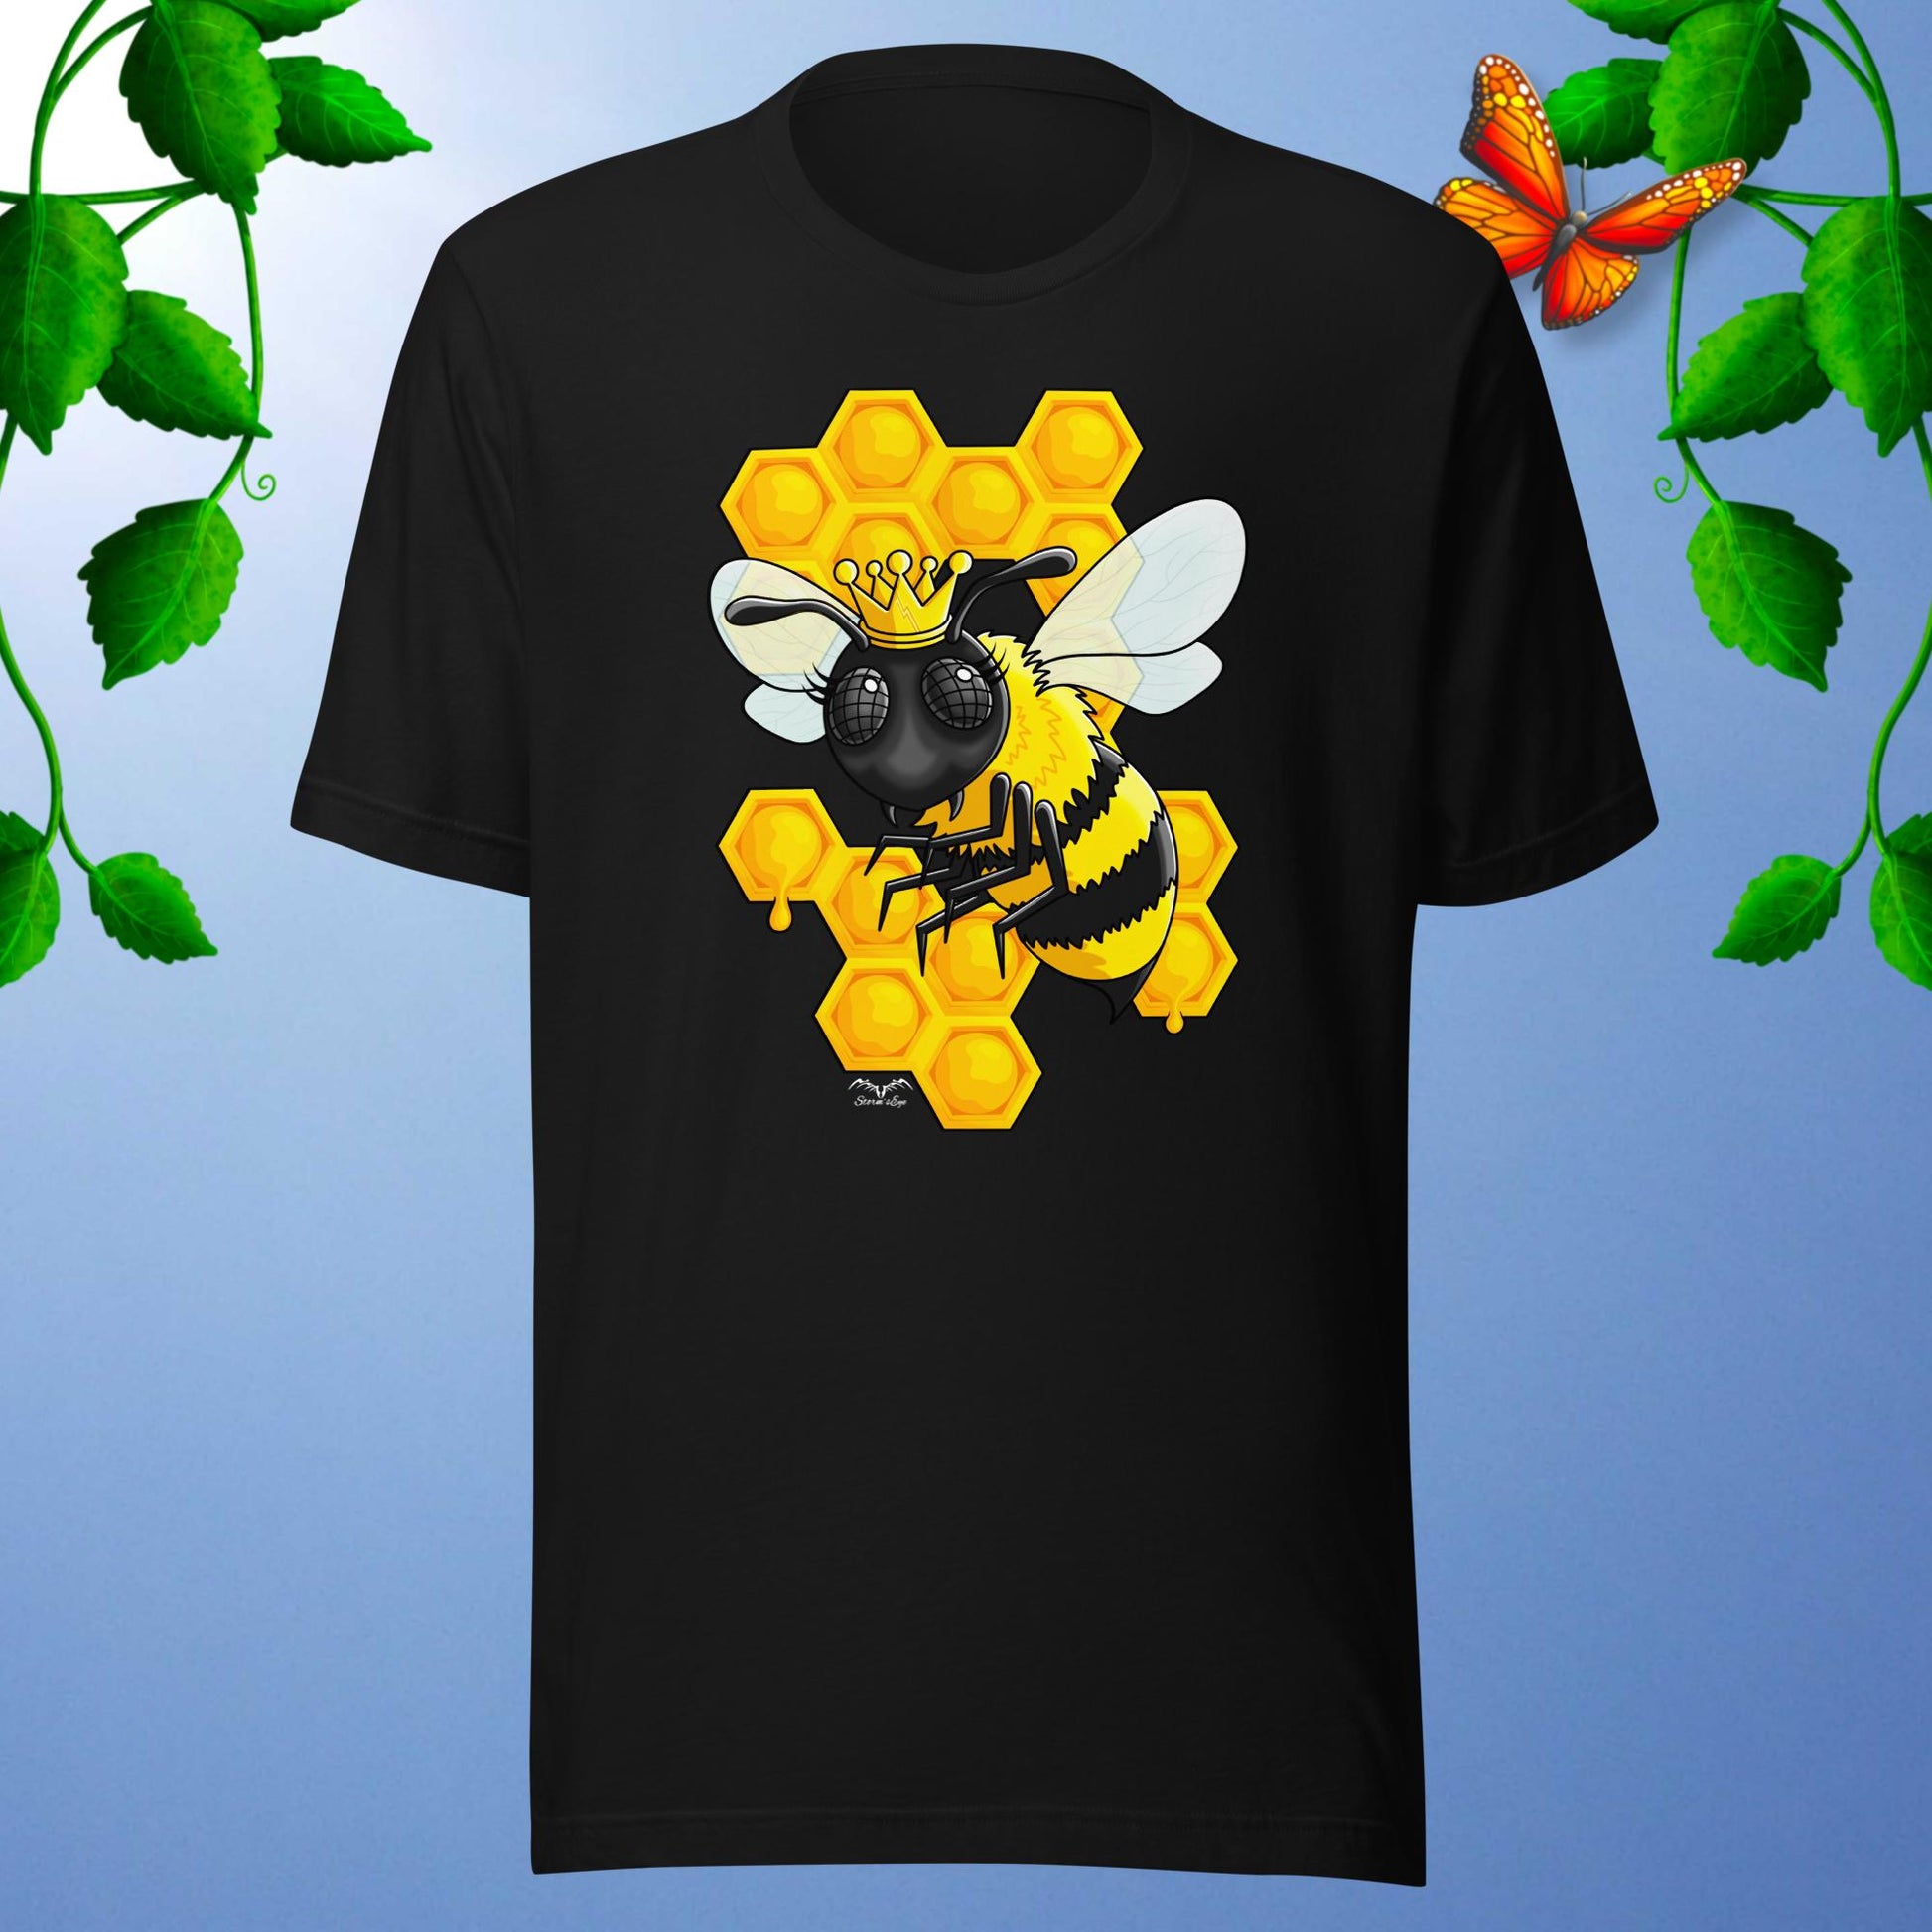 queen bee t-shirt black by stormseye design